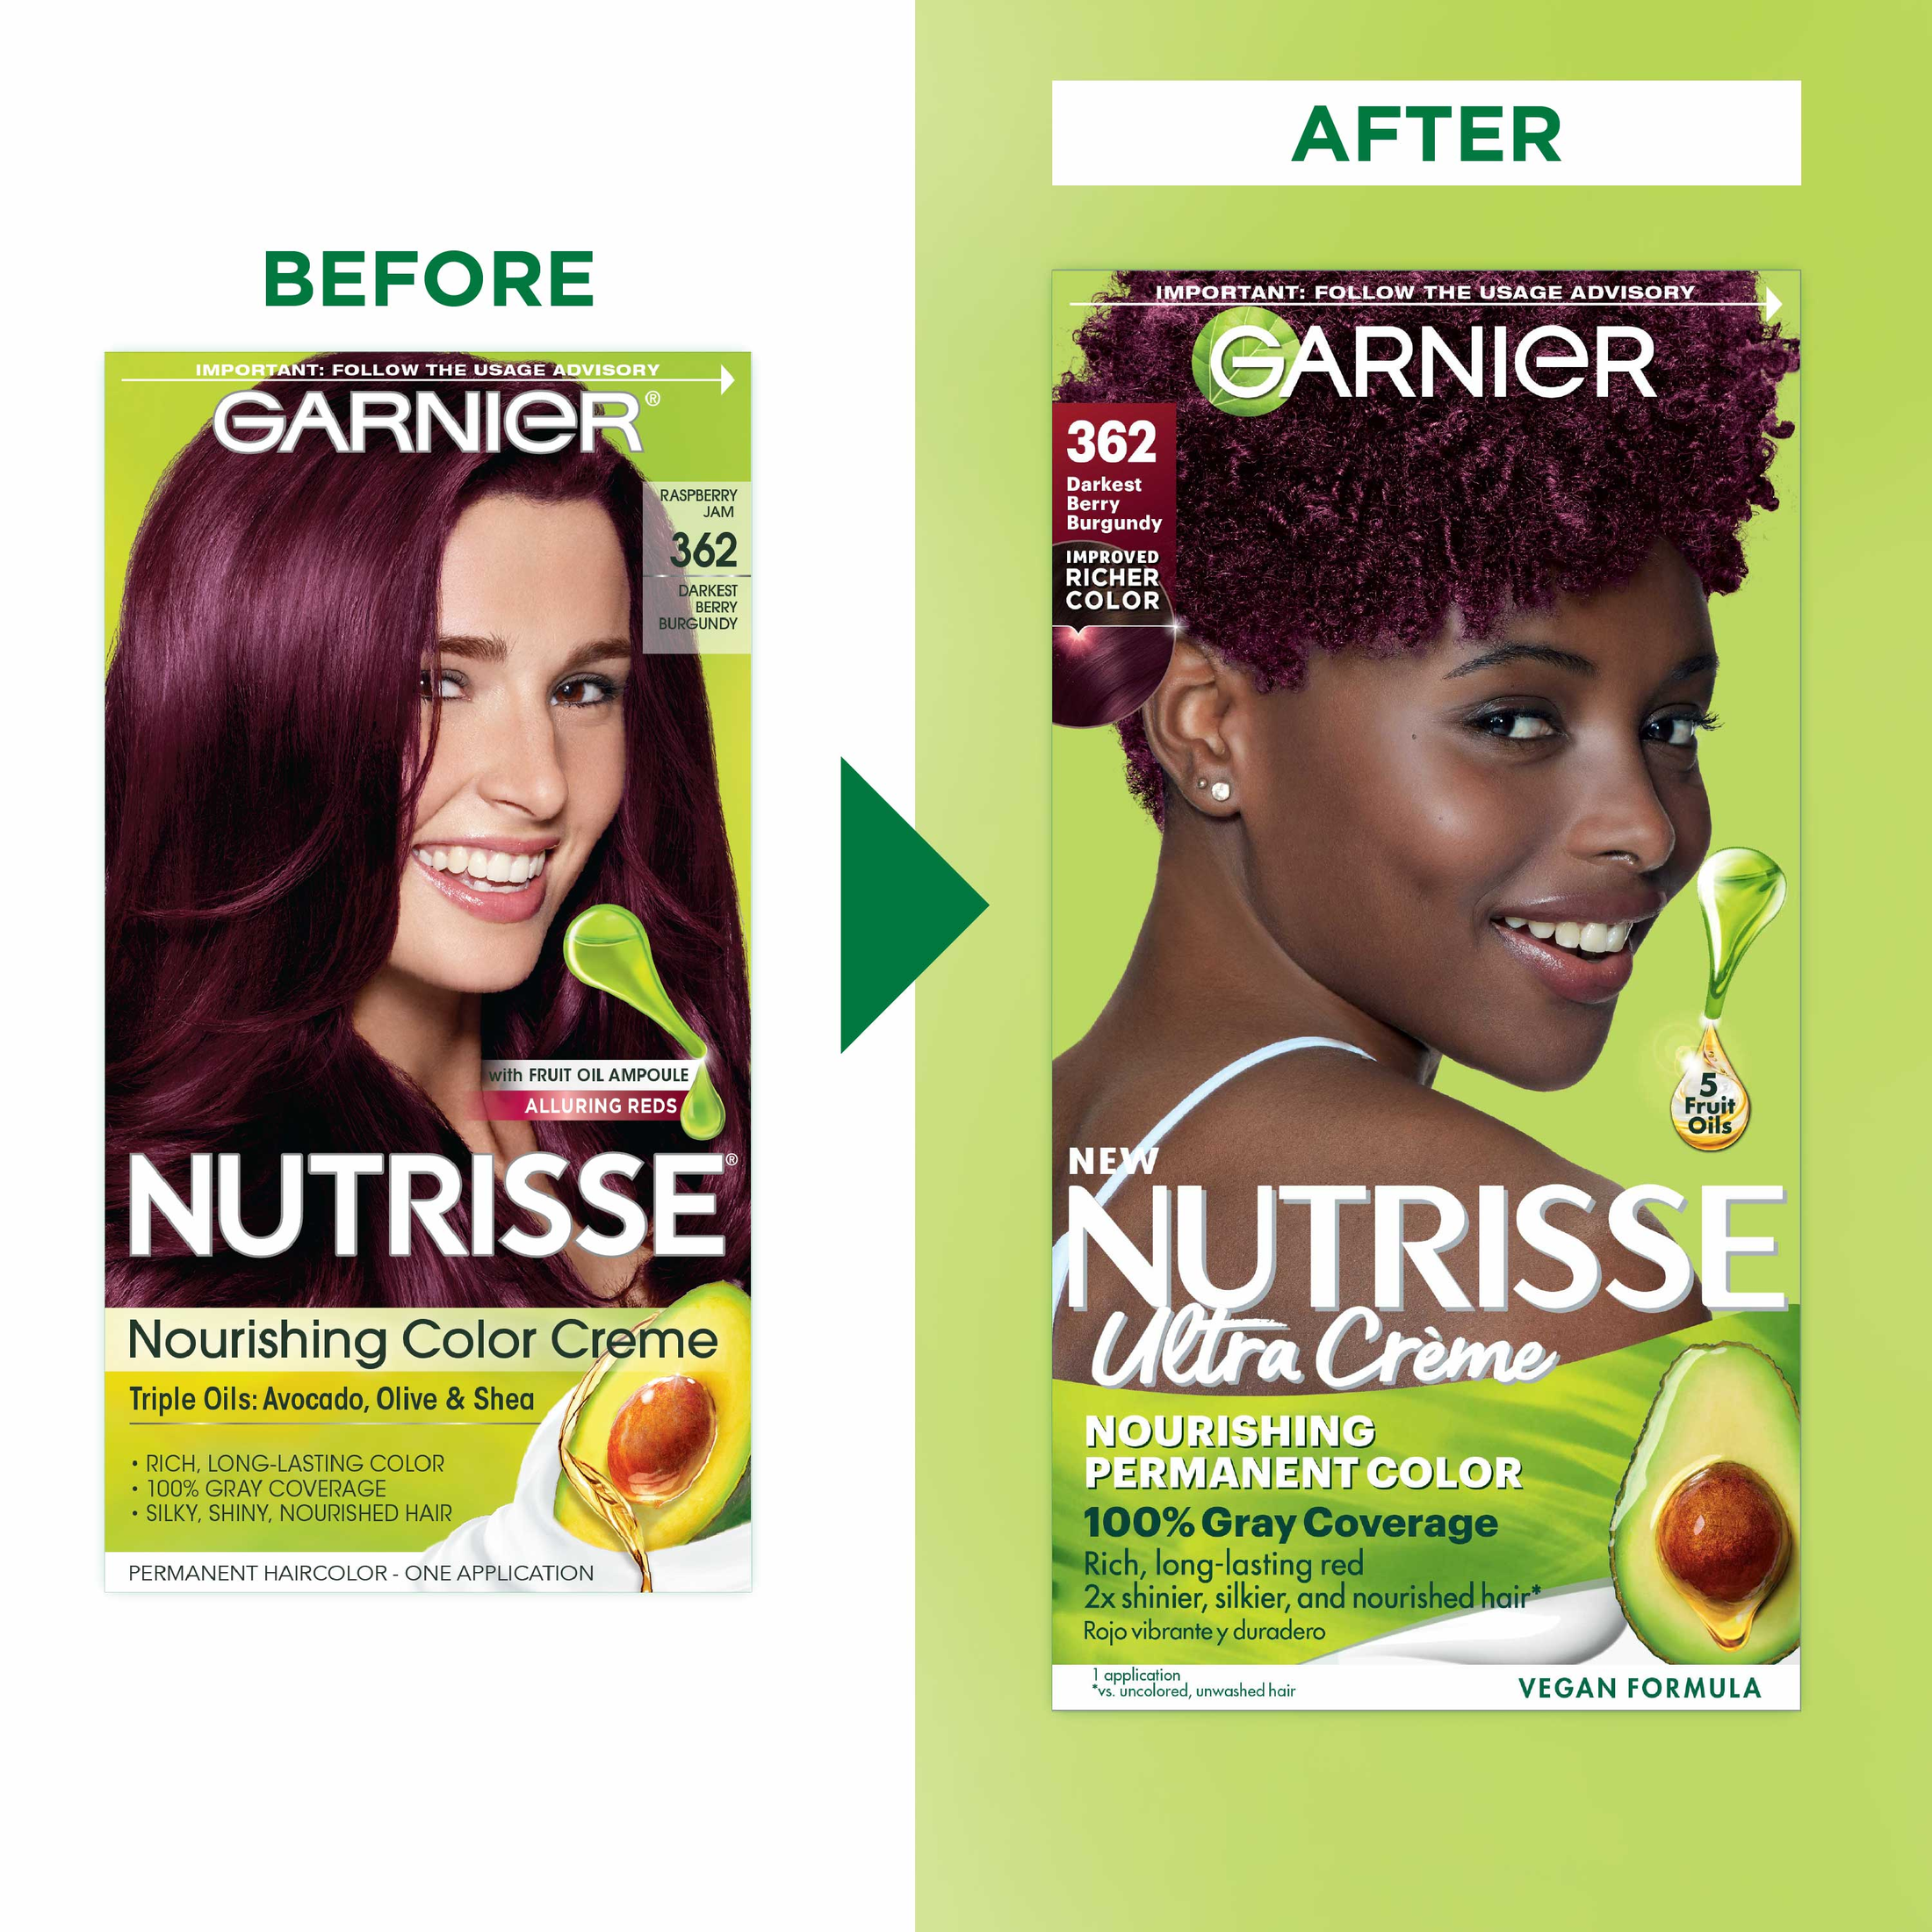 Garnier Nutrisse Nourishing Hair Color Creme, 362 Darkest Berry Burgundy - image 3 of 11